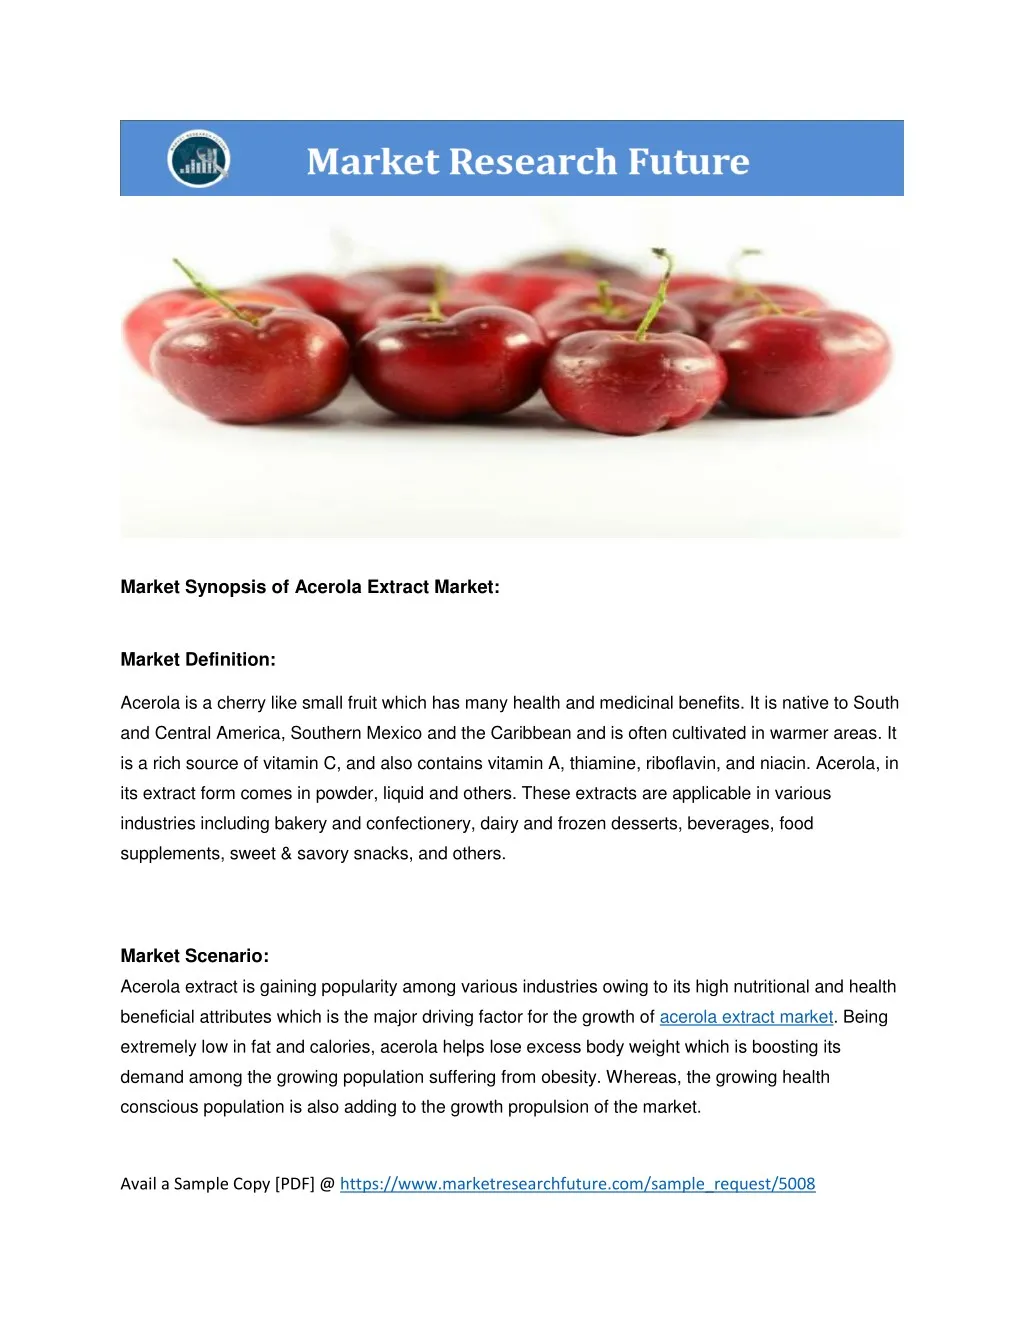 market synopsis of acerola extract market